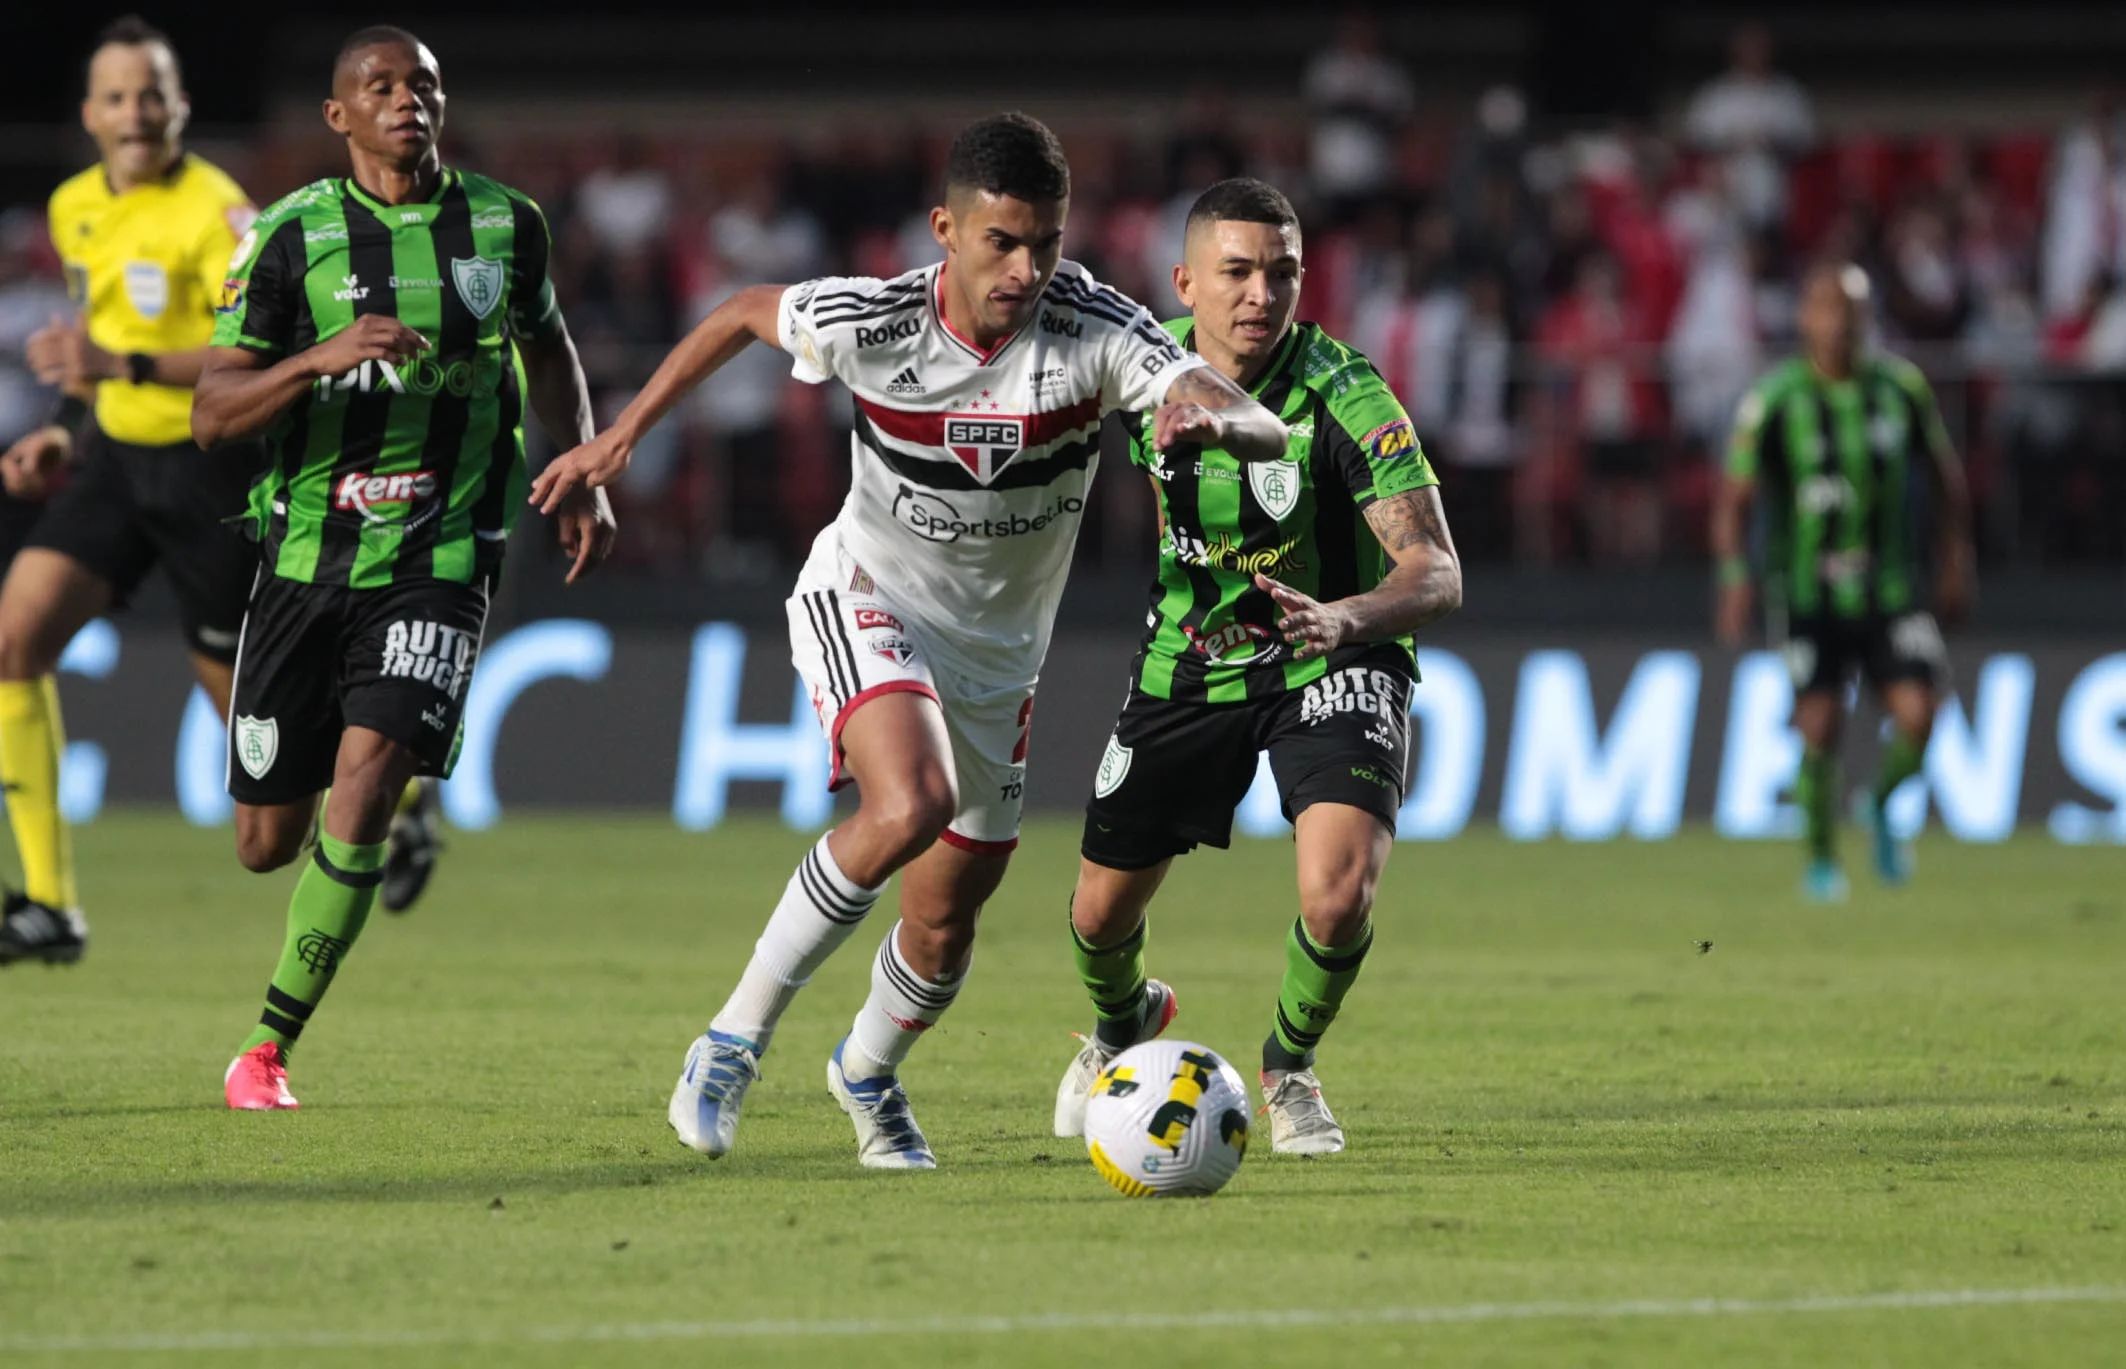 America MG: A Closer Look at Brazil's Belo Horizonte Football Club